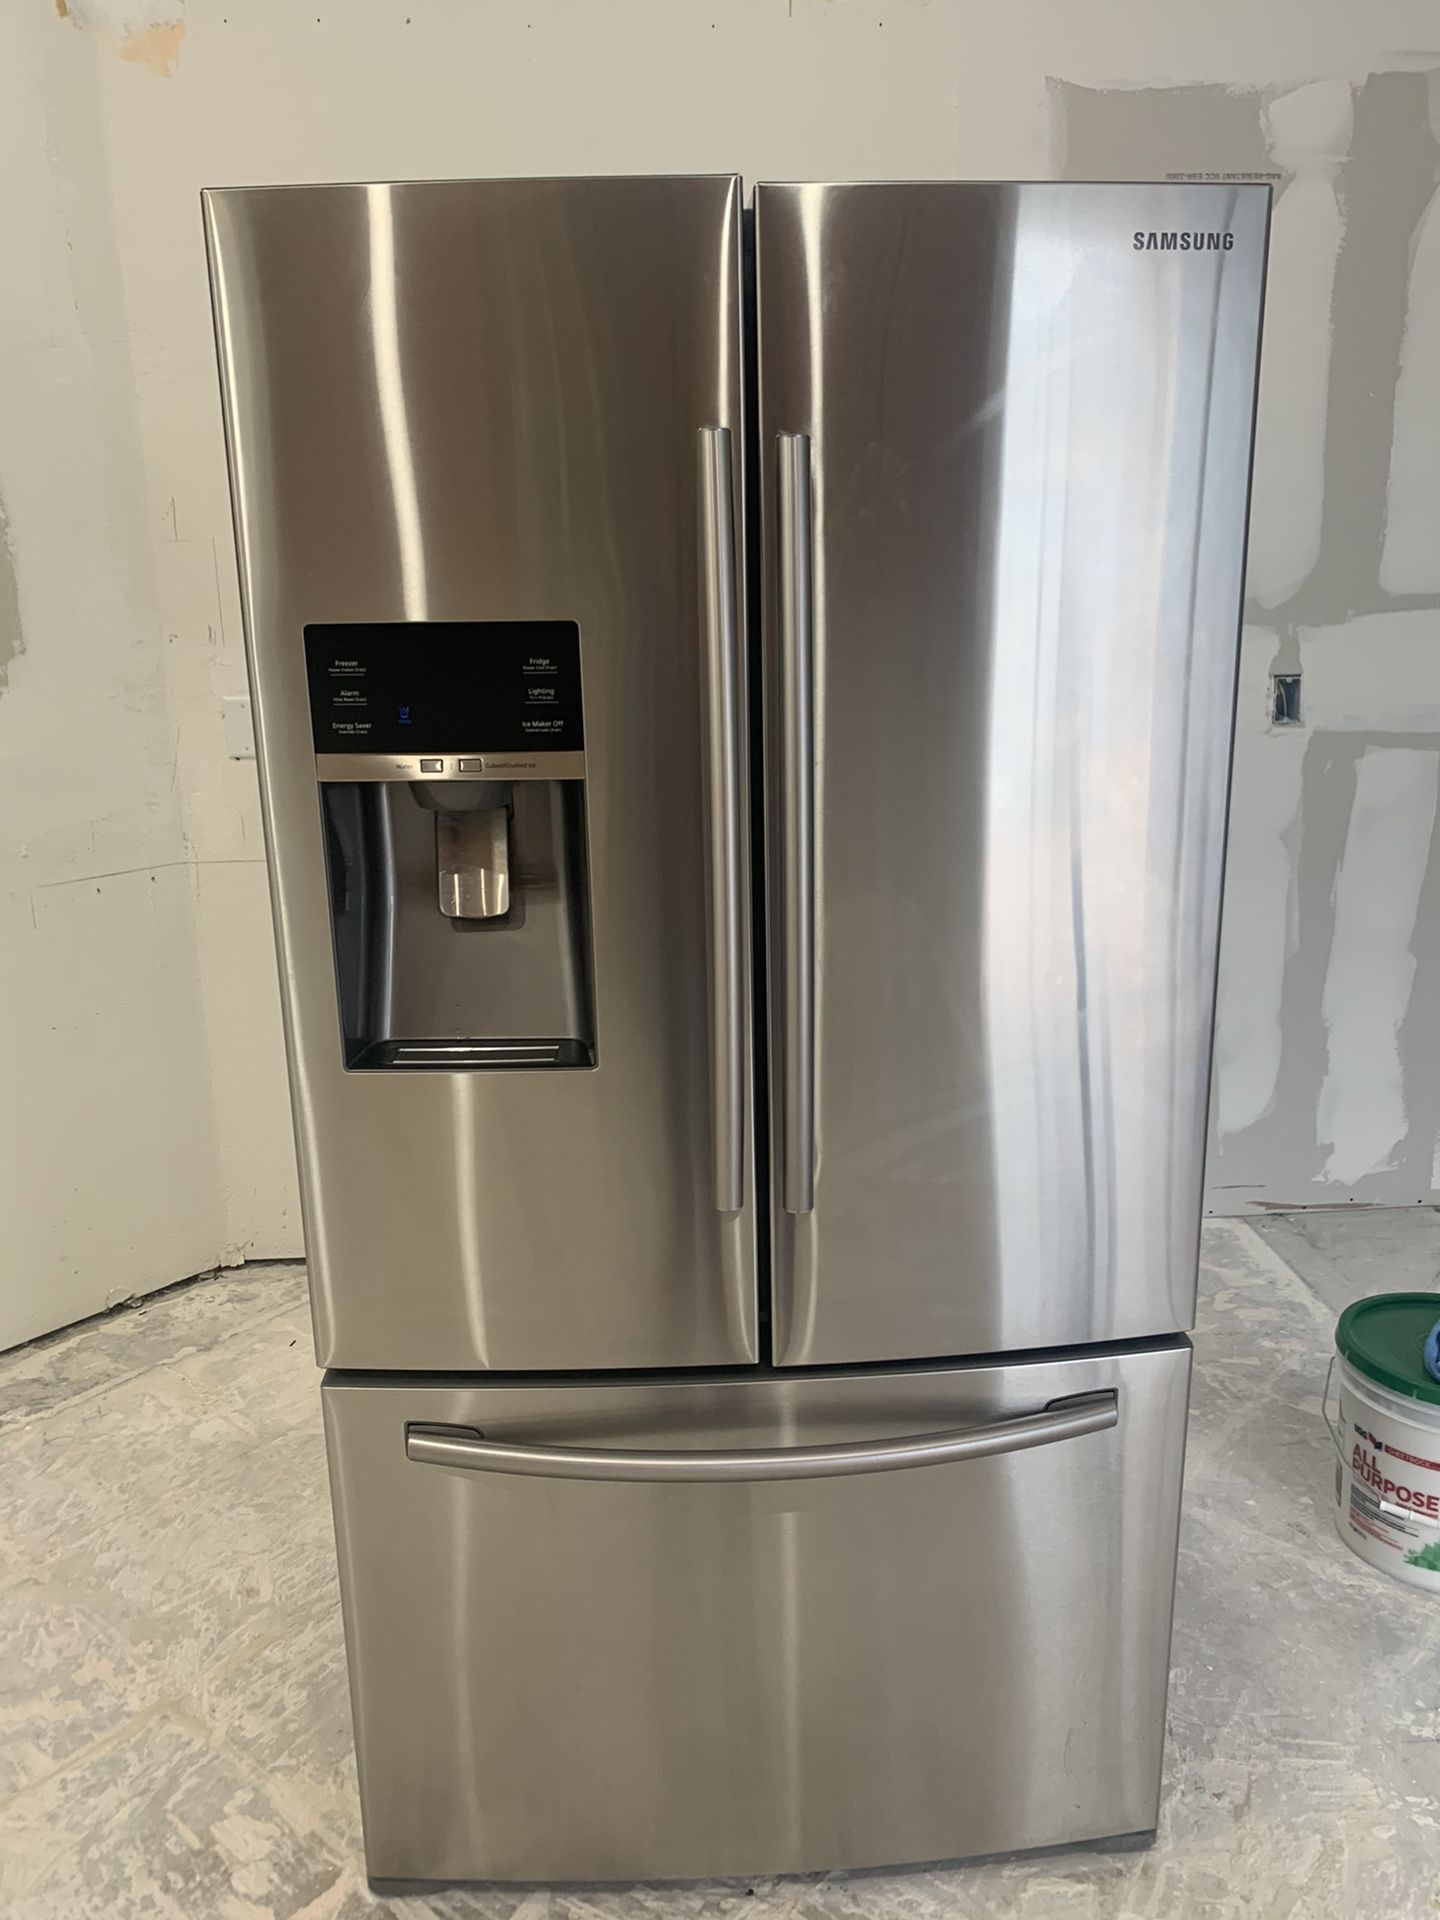 Samsung fridge, stove, microwave and dishwasher combo